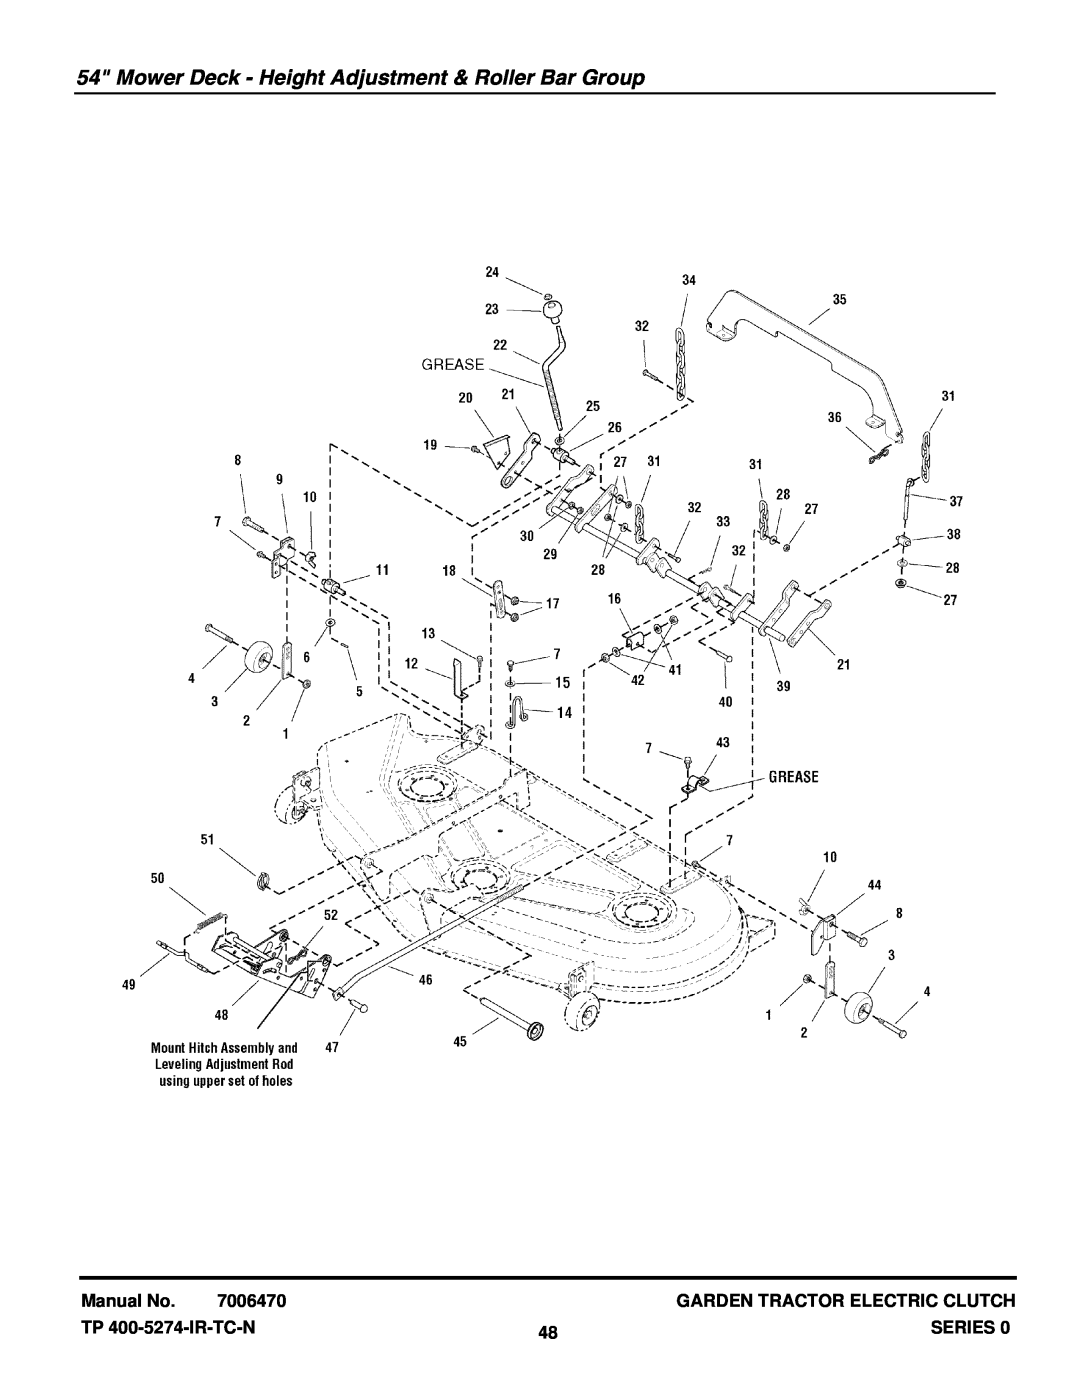 Snapper GT255400 (2690630) manual Manual No, 7006470, Garden Tractor Electric Clutch, TP 400-5274-IR-TC-N, Series 